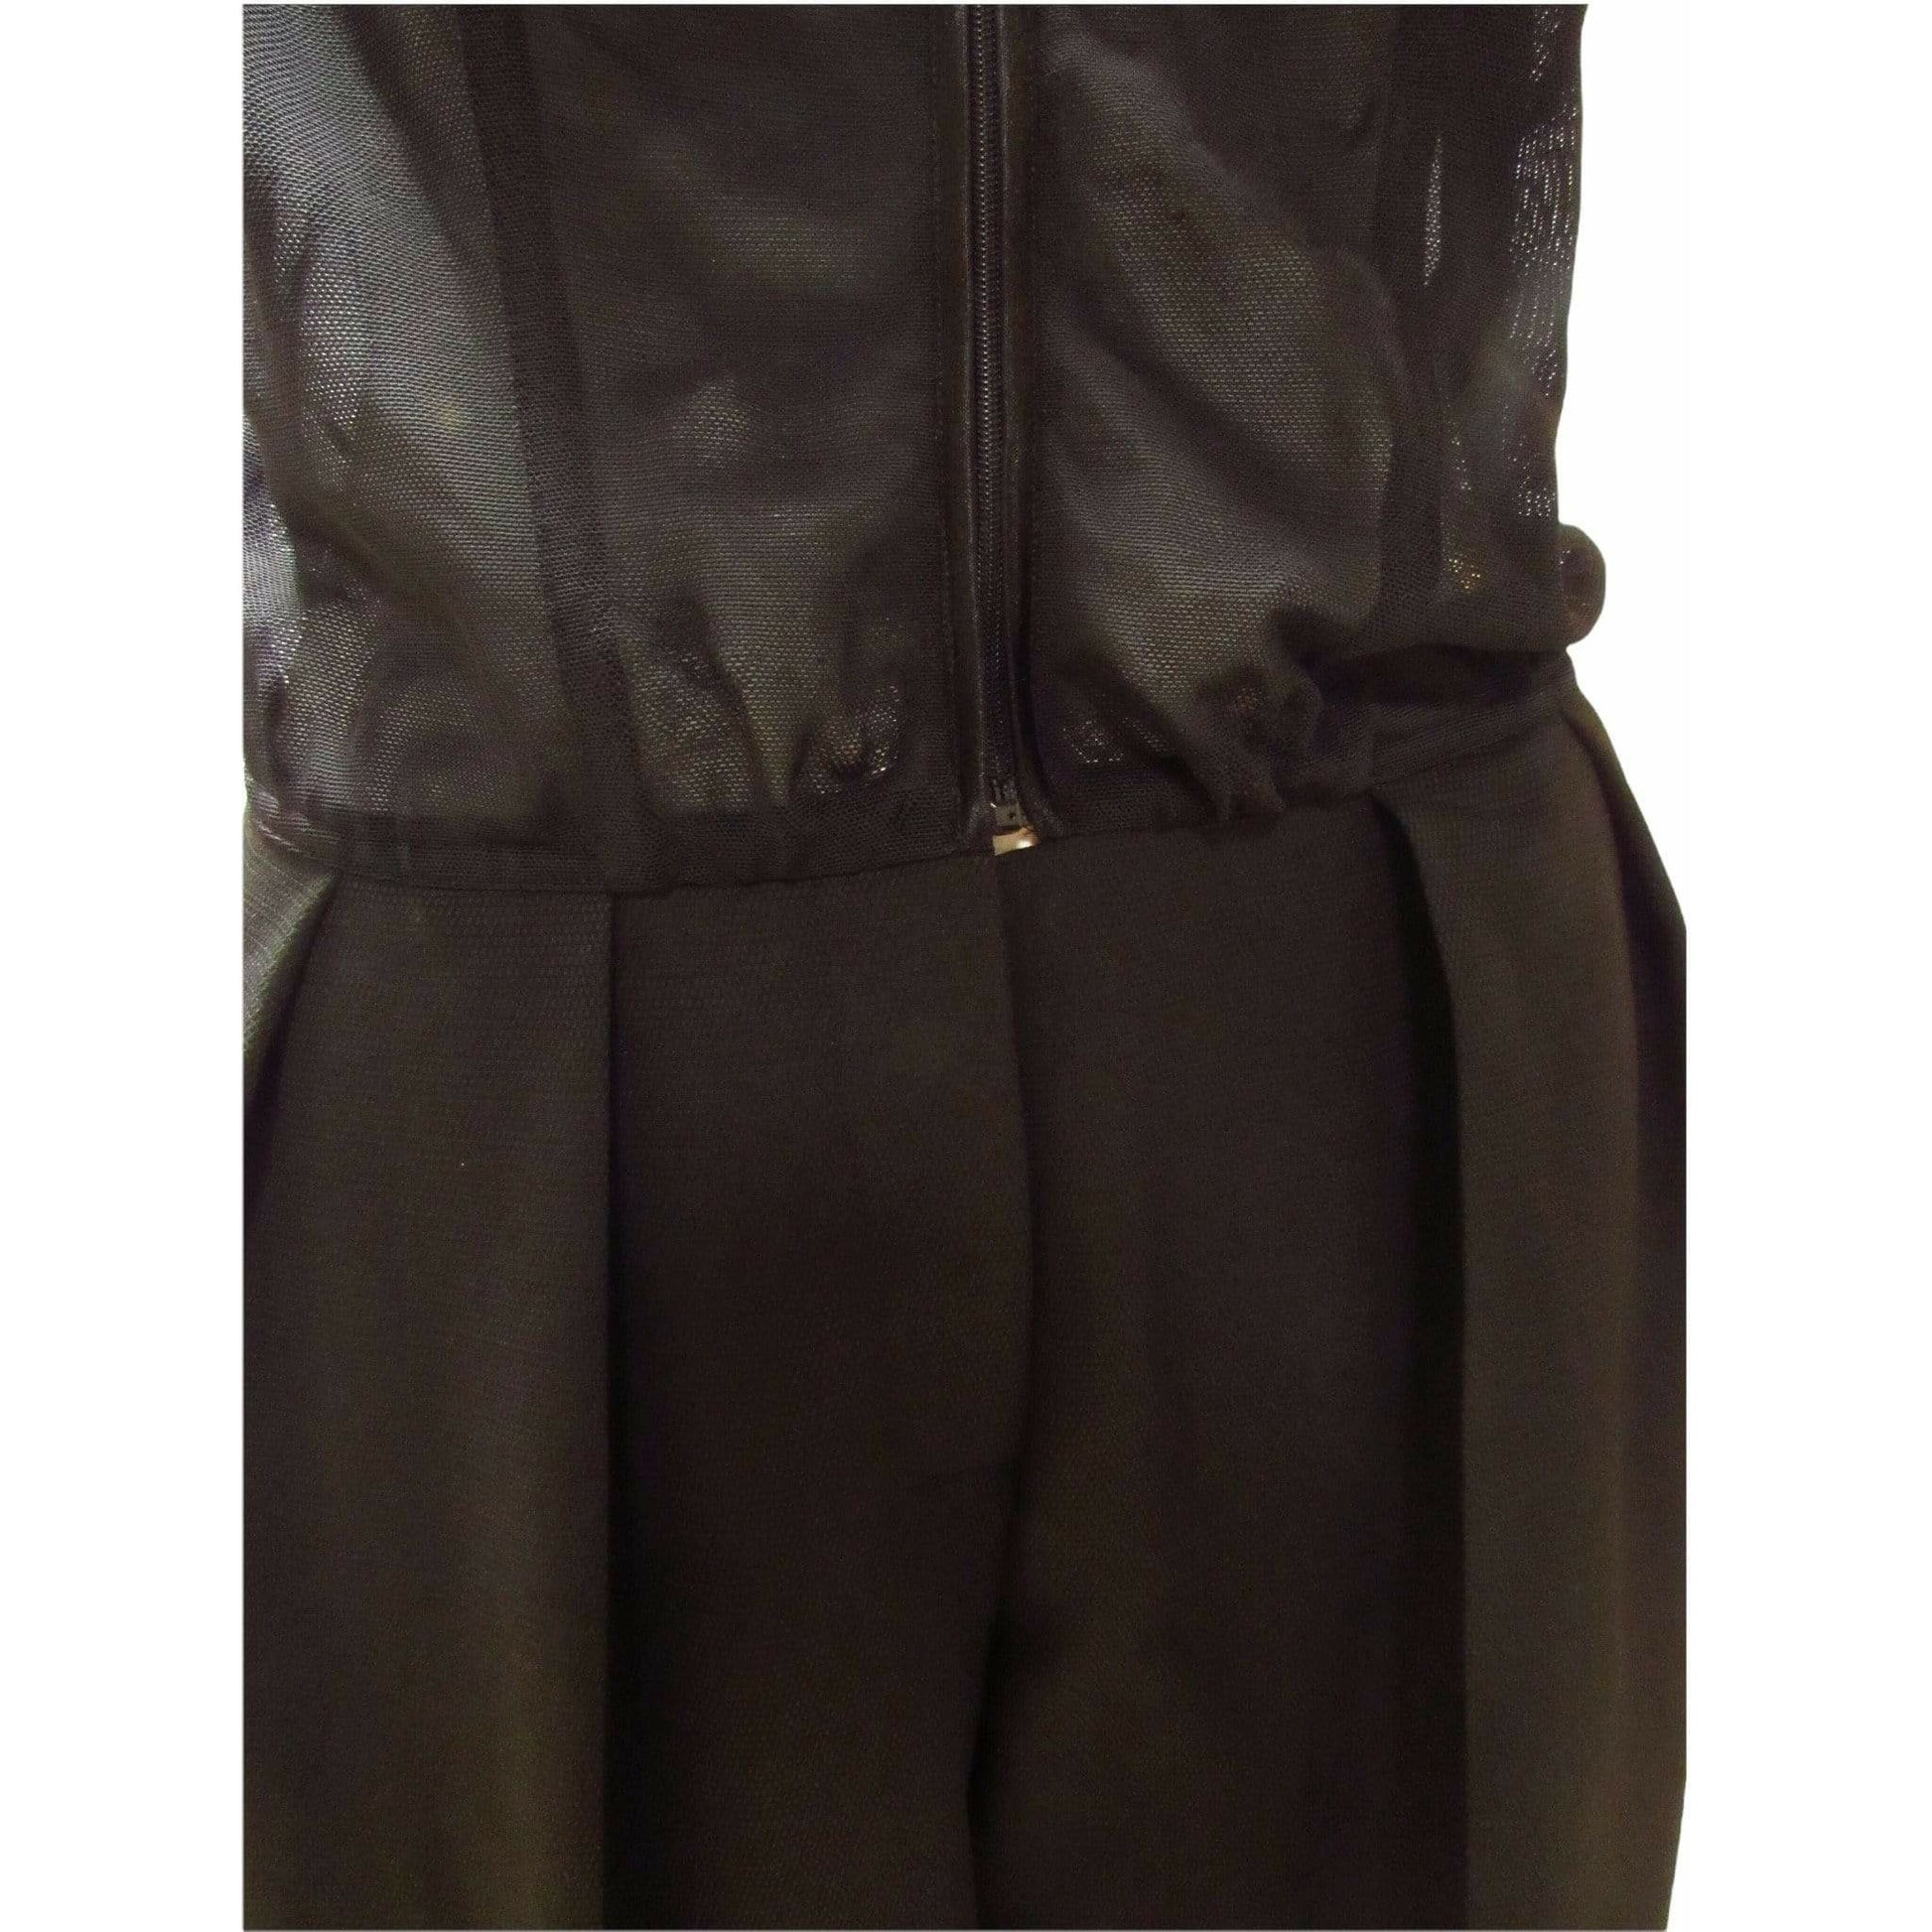 chantal-thomass-zippered-black-jumpsuit Jumpsuits & Rompers Dark Slate Gray